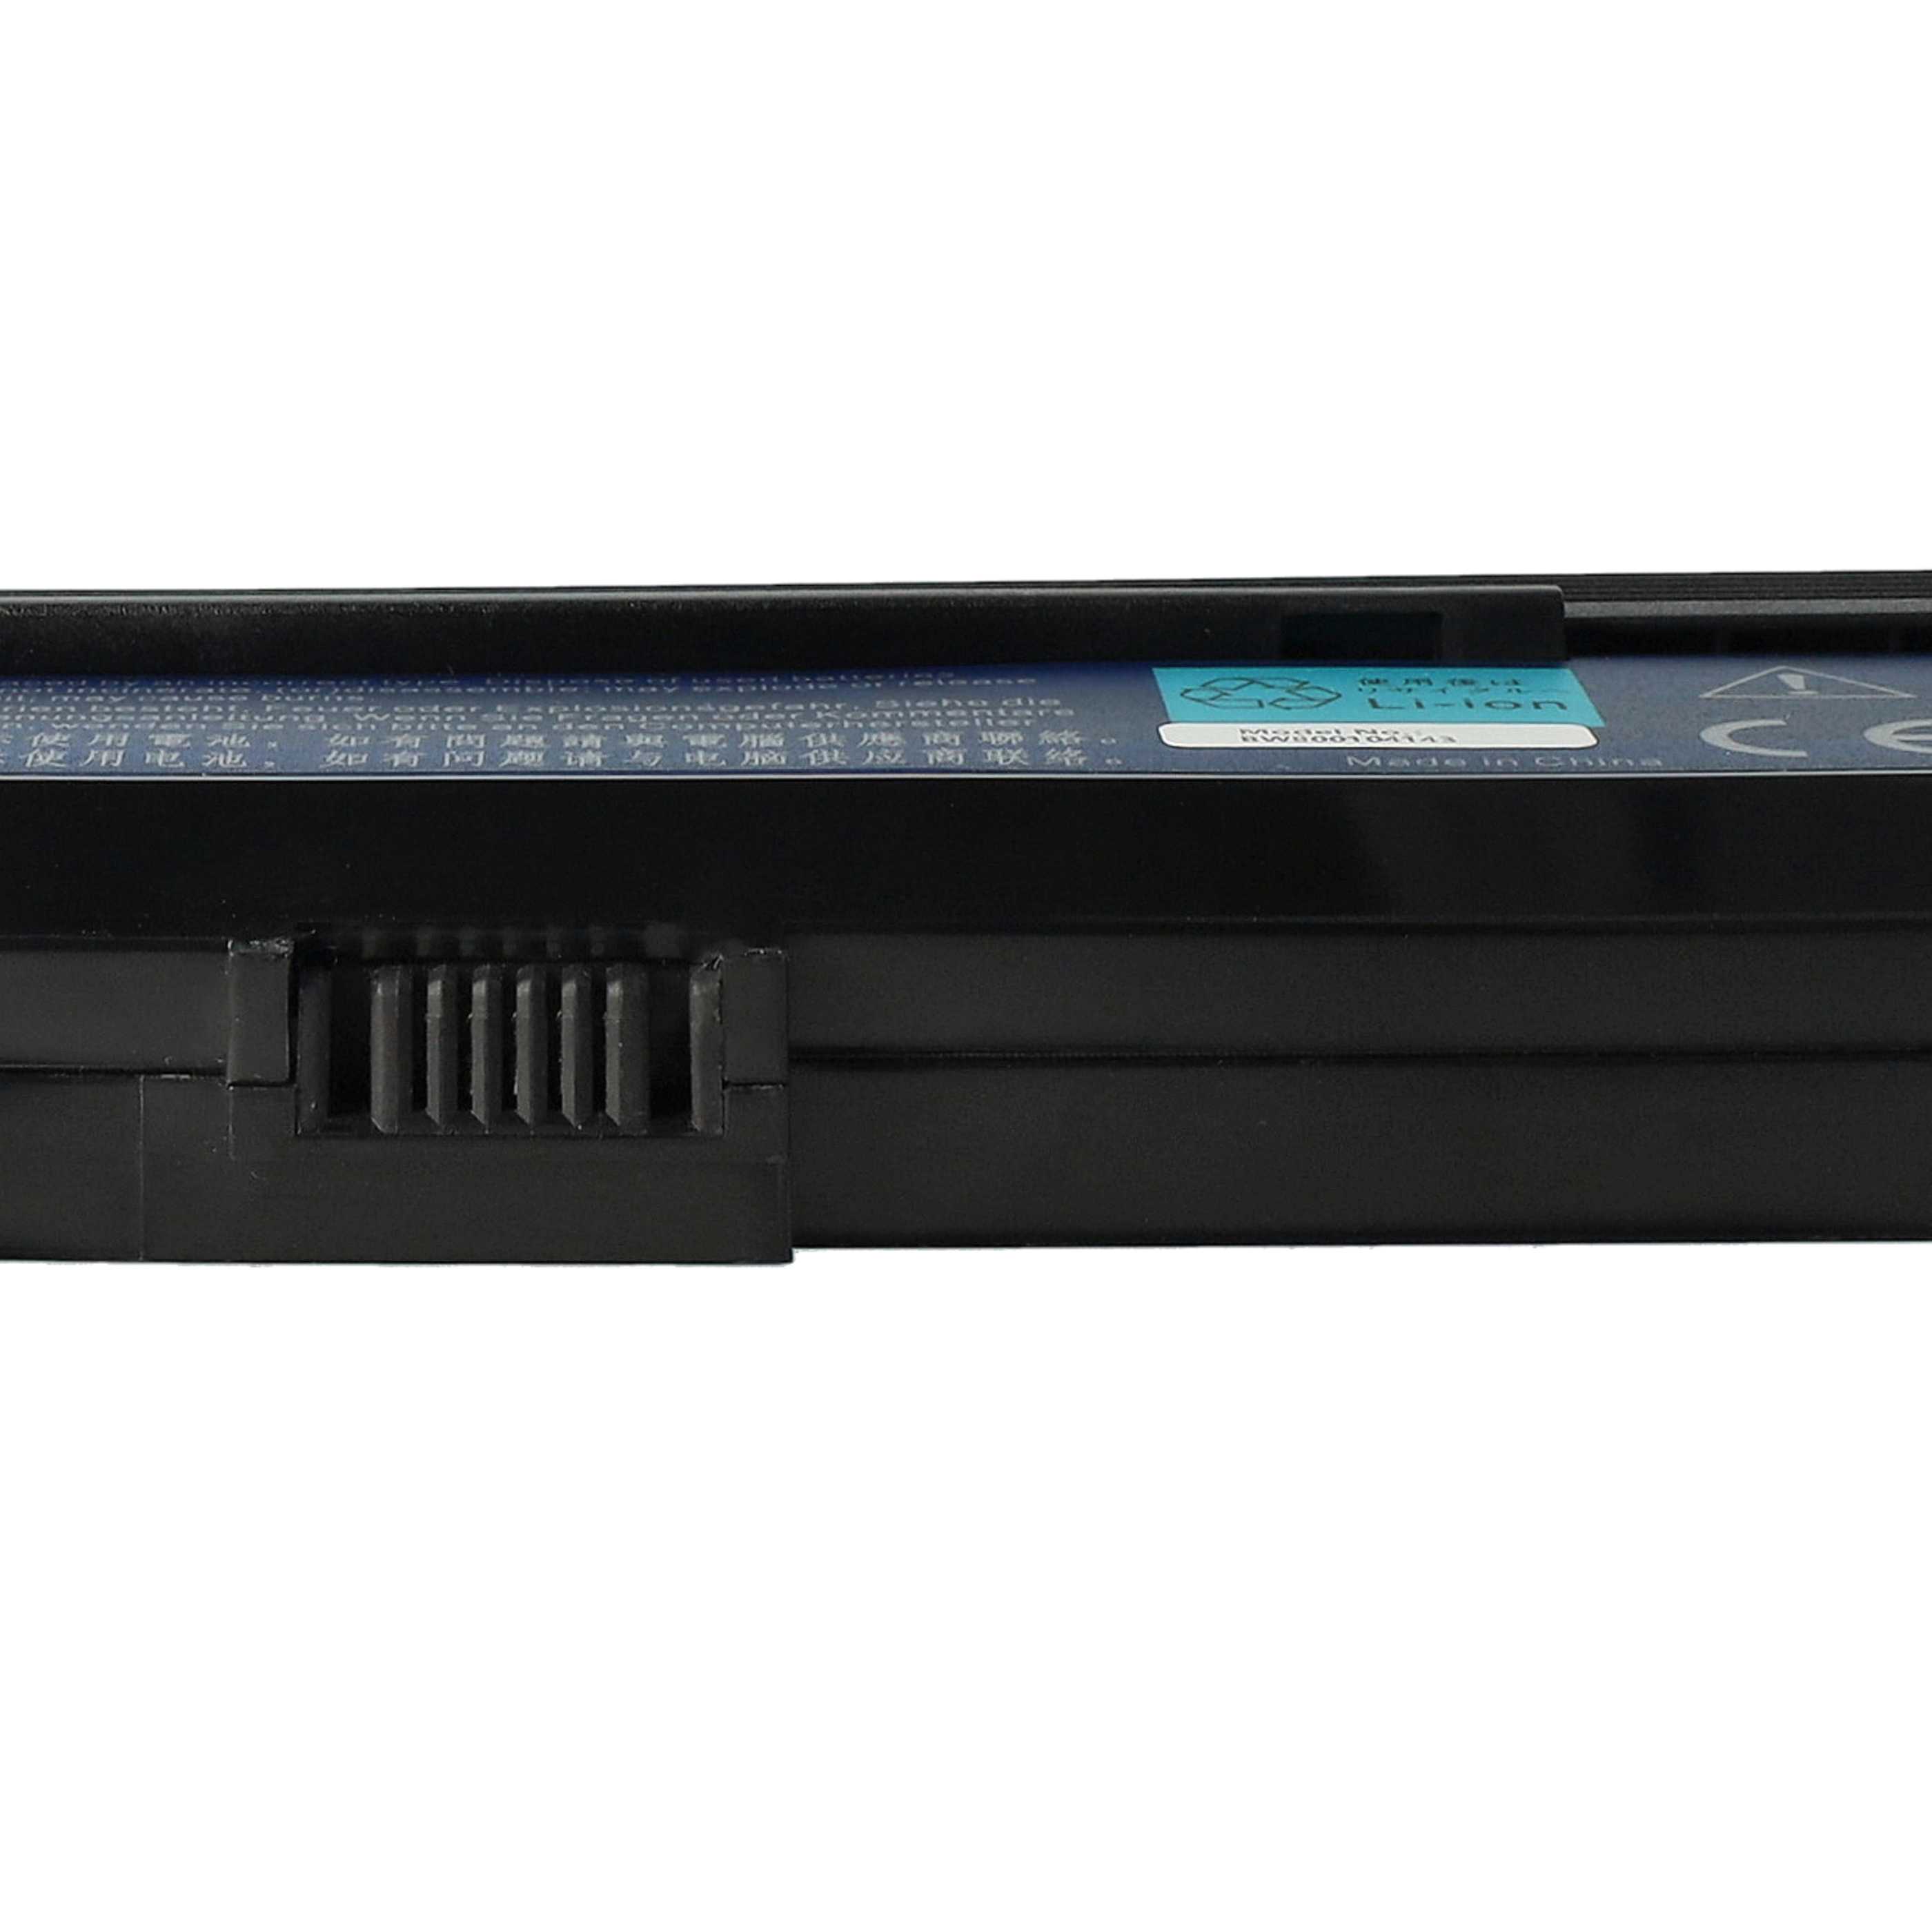 Batteria sostituisce Acer 3UR18650F-3-QC-ZR1, 3UR18650Y-2-QC261 per notebook Acer - 6600mAh 11,1V Li-Ion nero